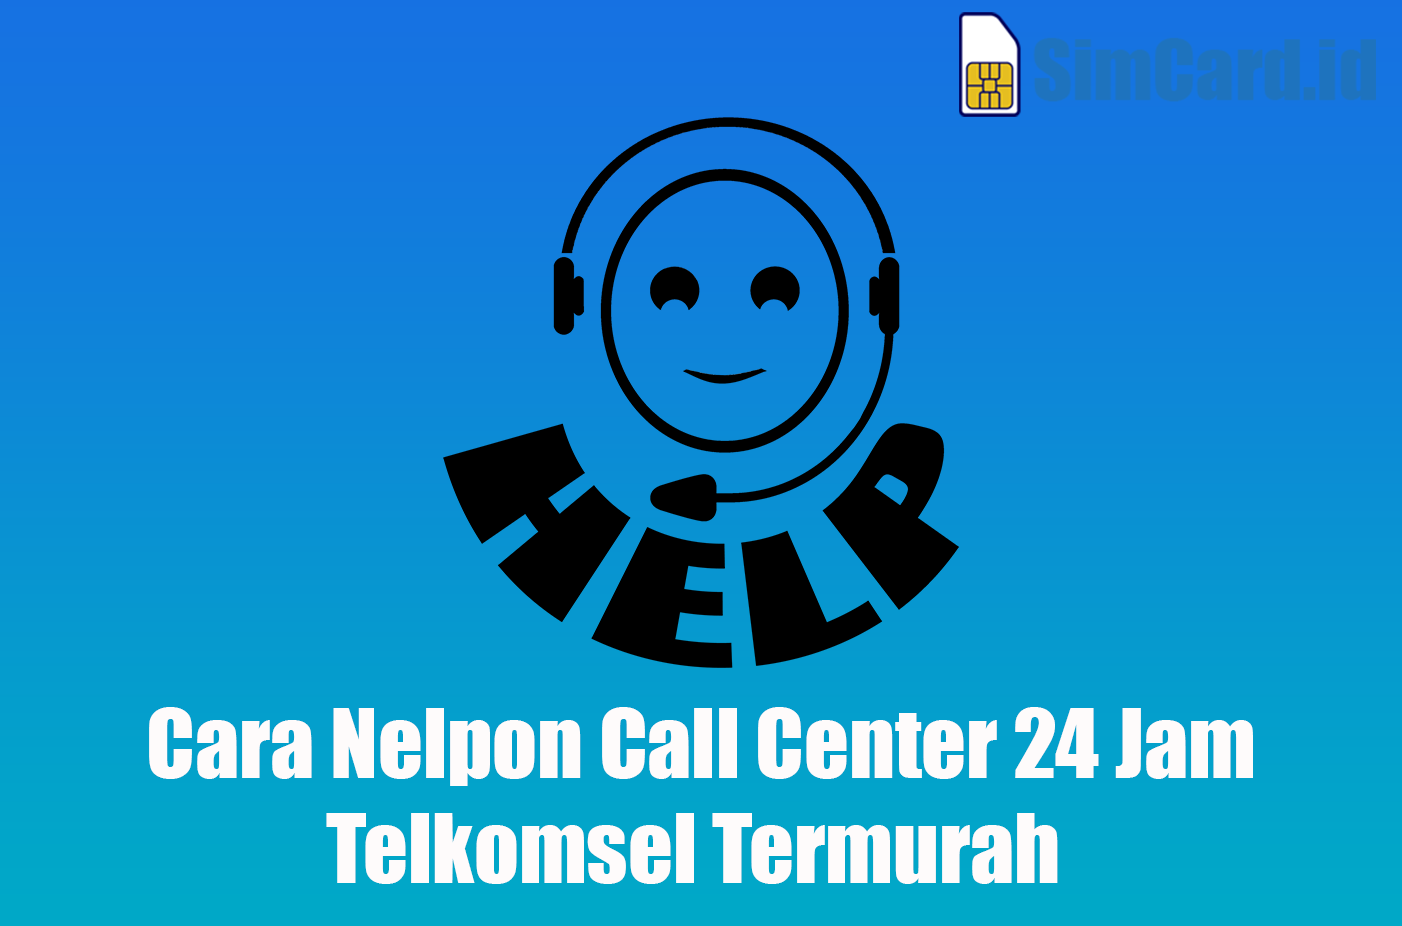 Cara Nelpon Call Center 24 Jam Telkomsel Termurah